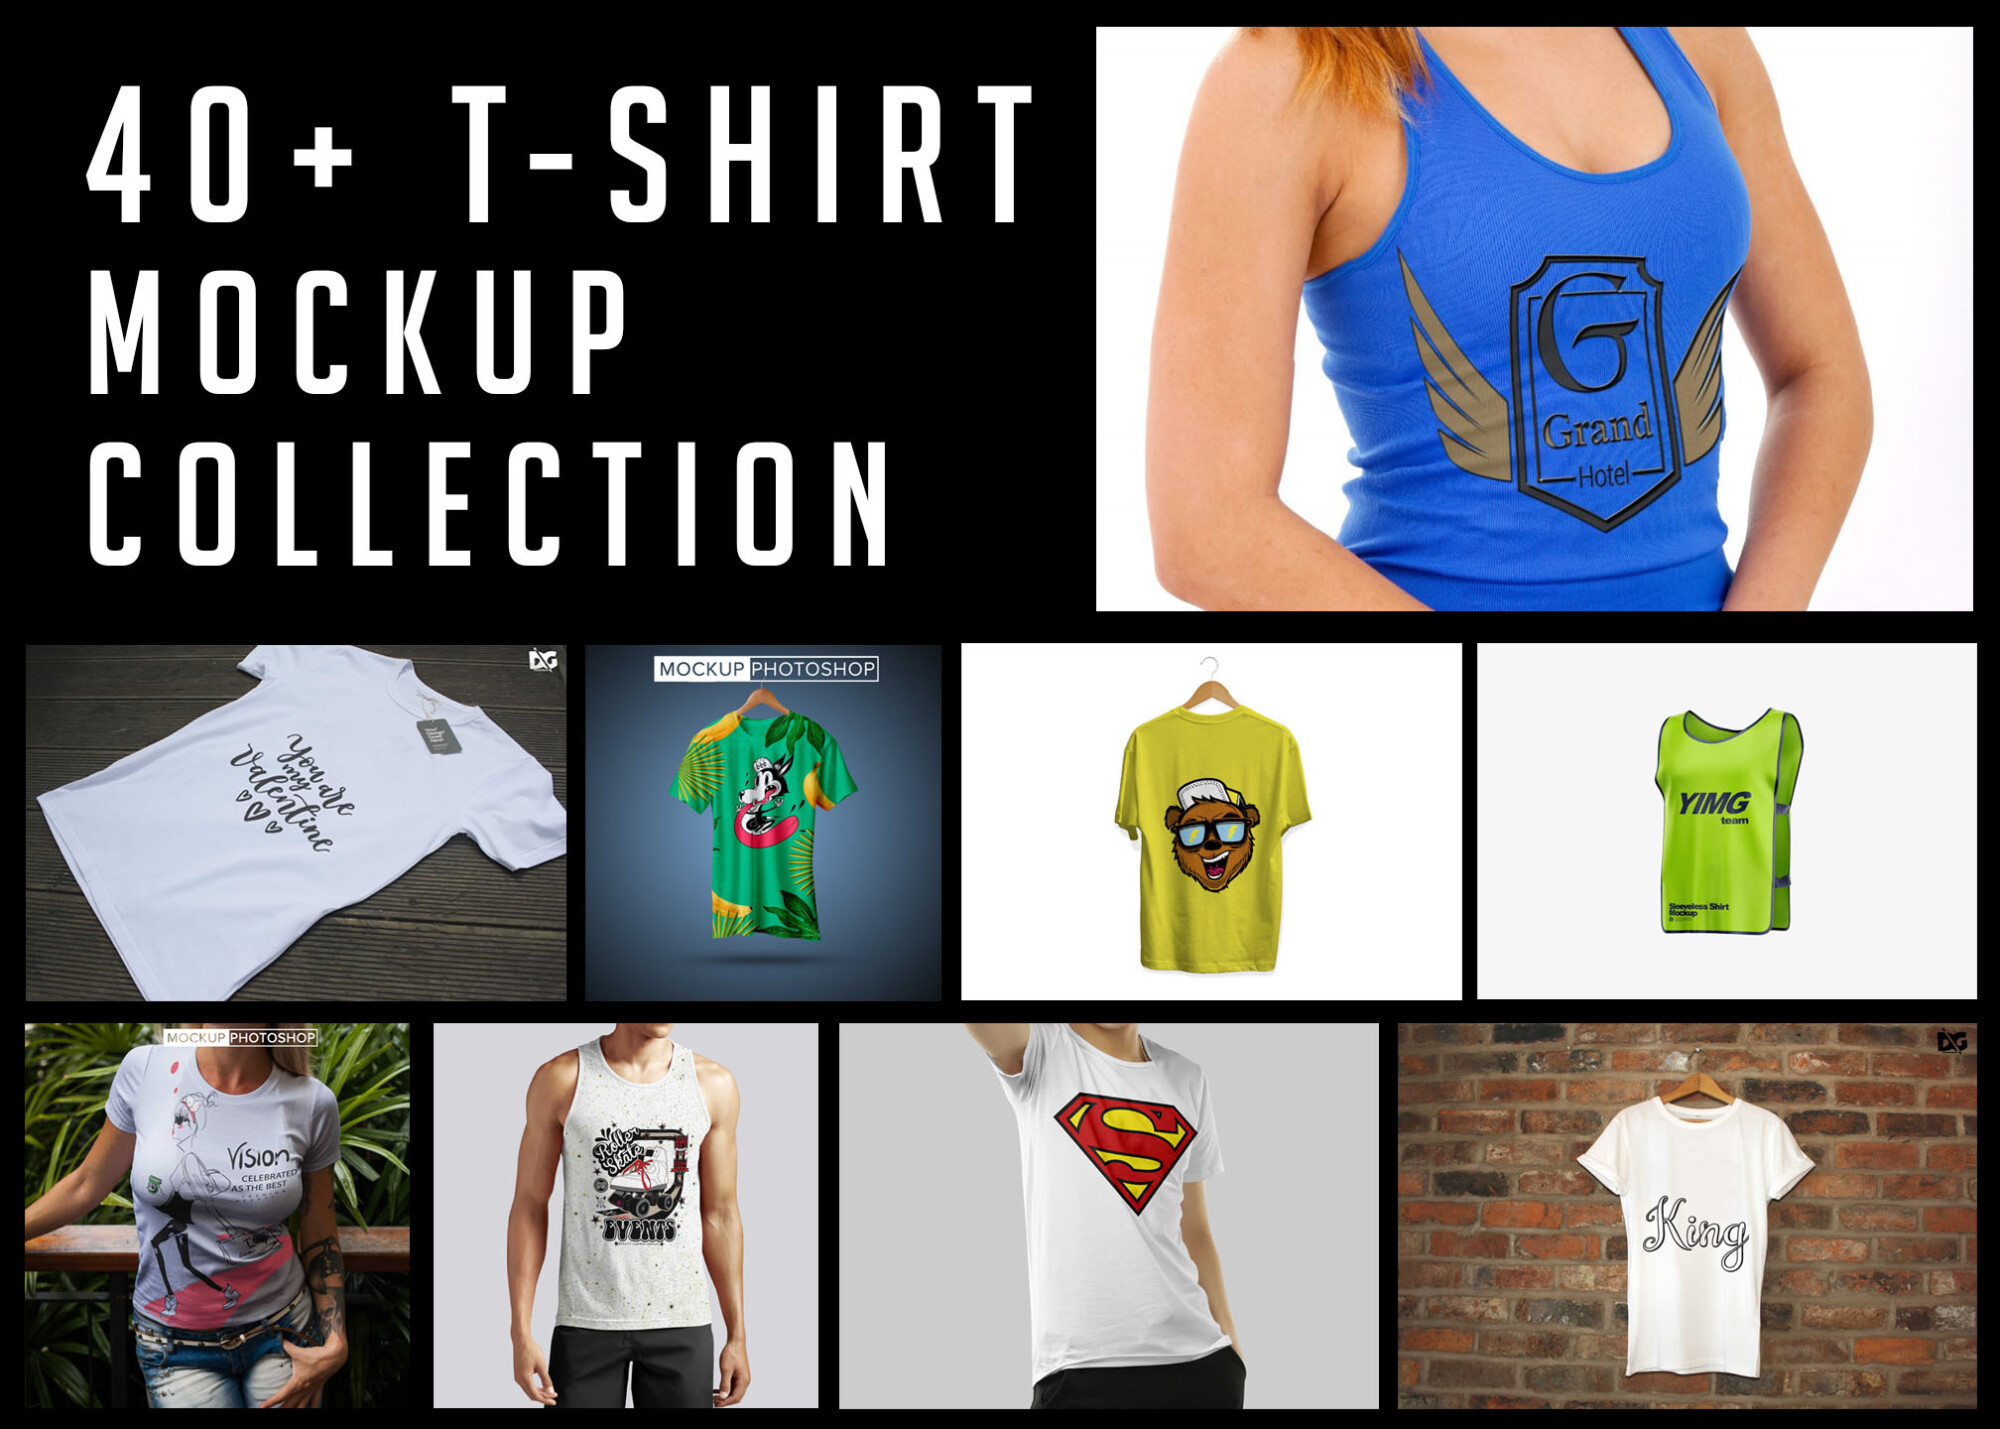 T-shirt Mockup Collection